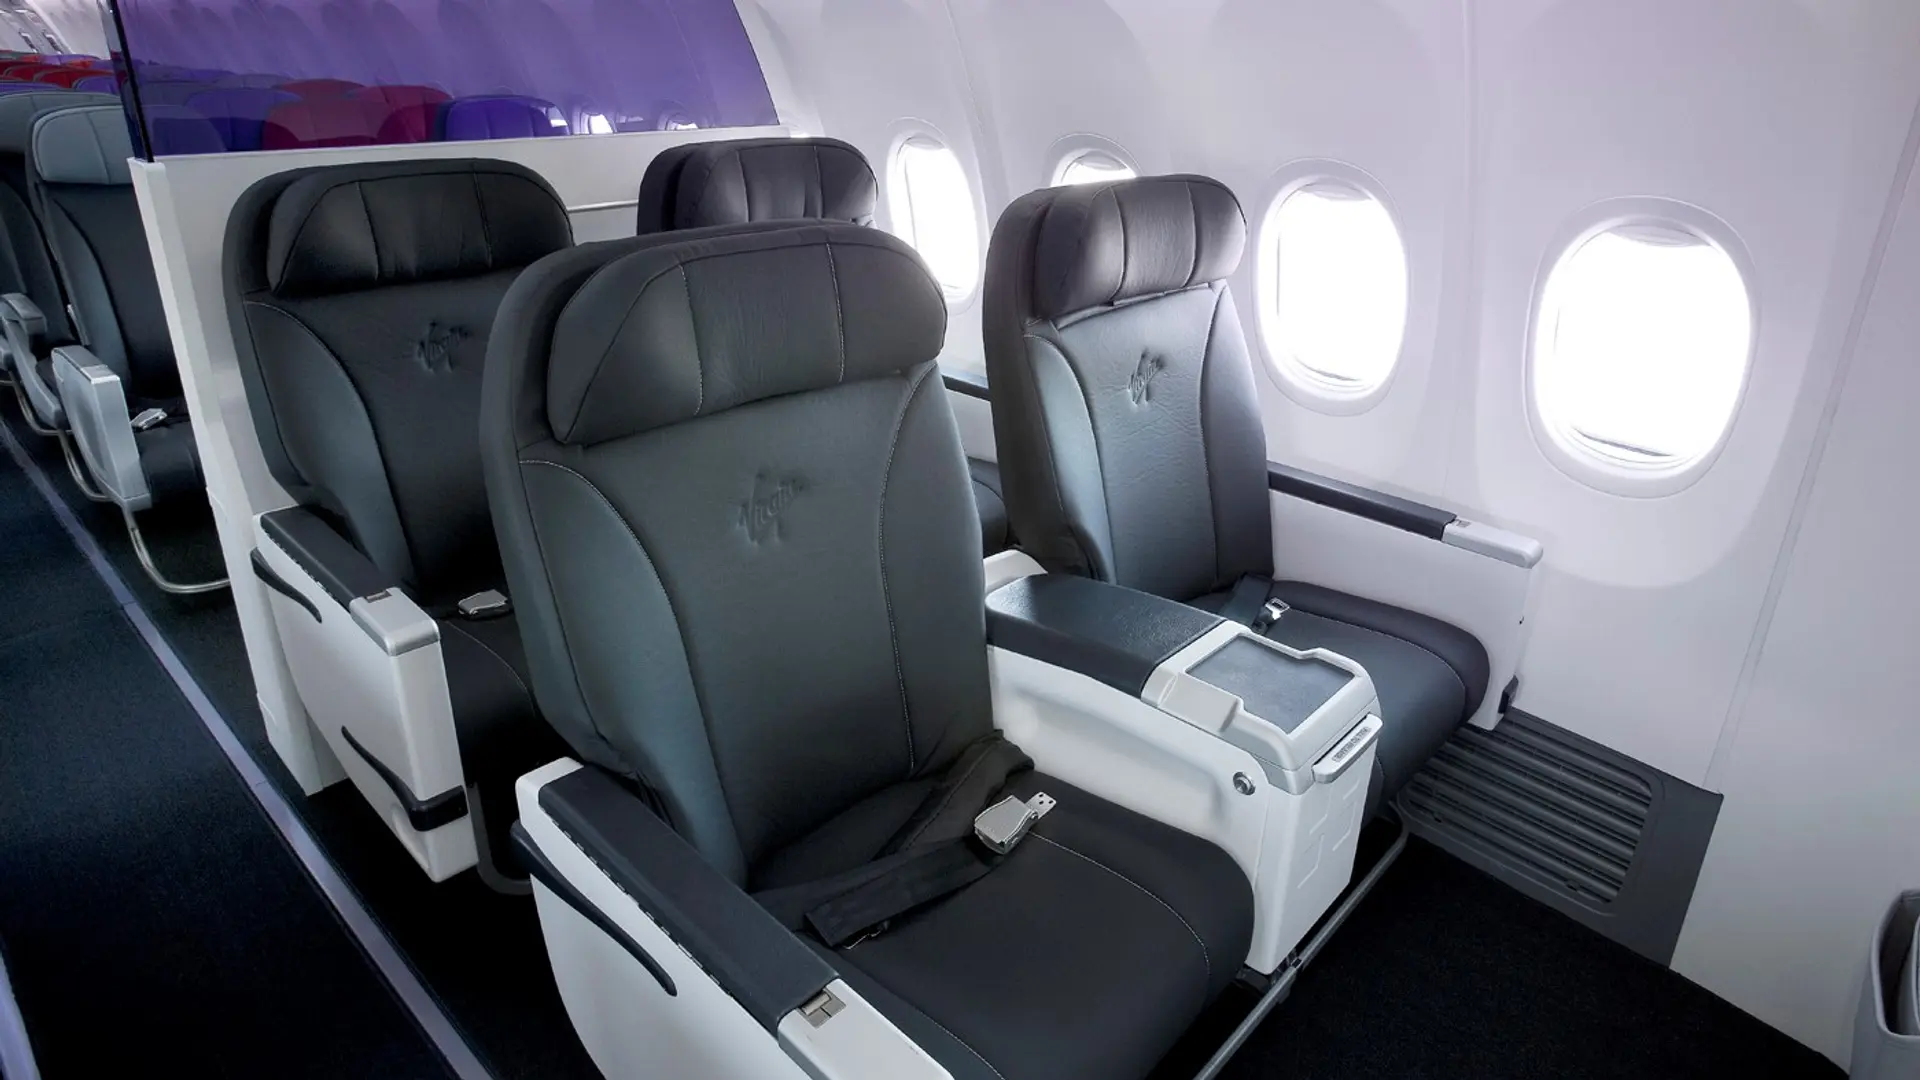 Airline review Cabin & Seat - Virgin Australia - 1